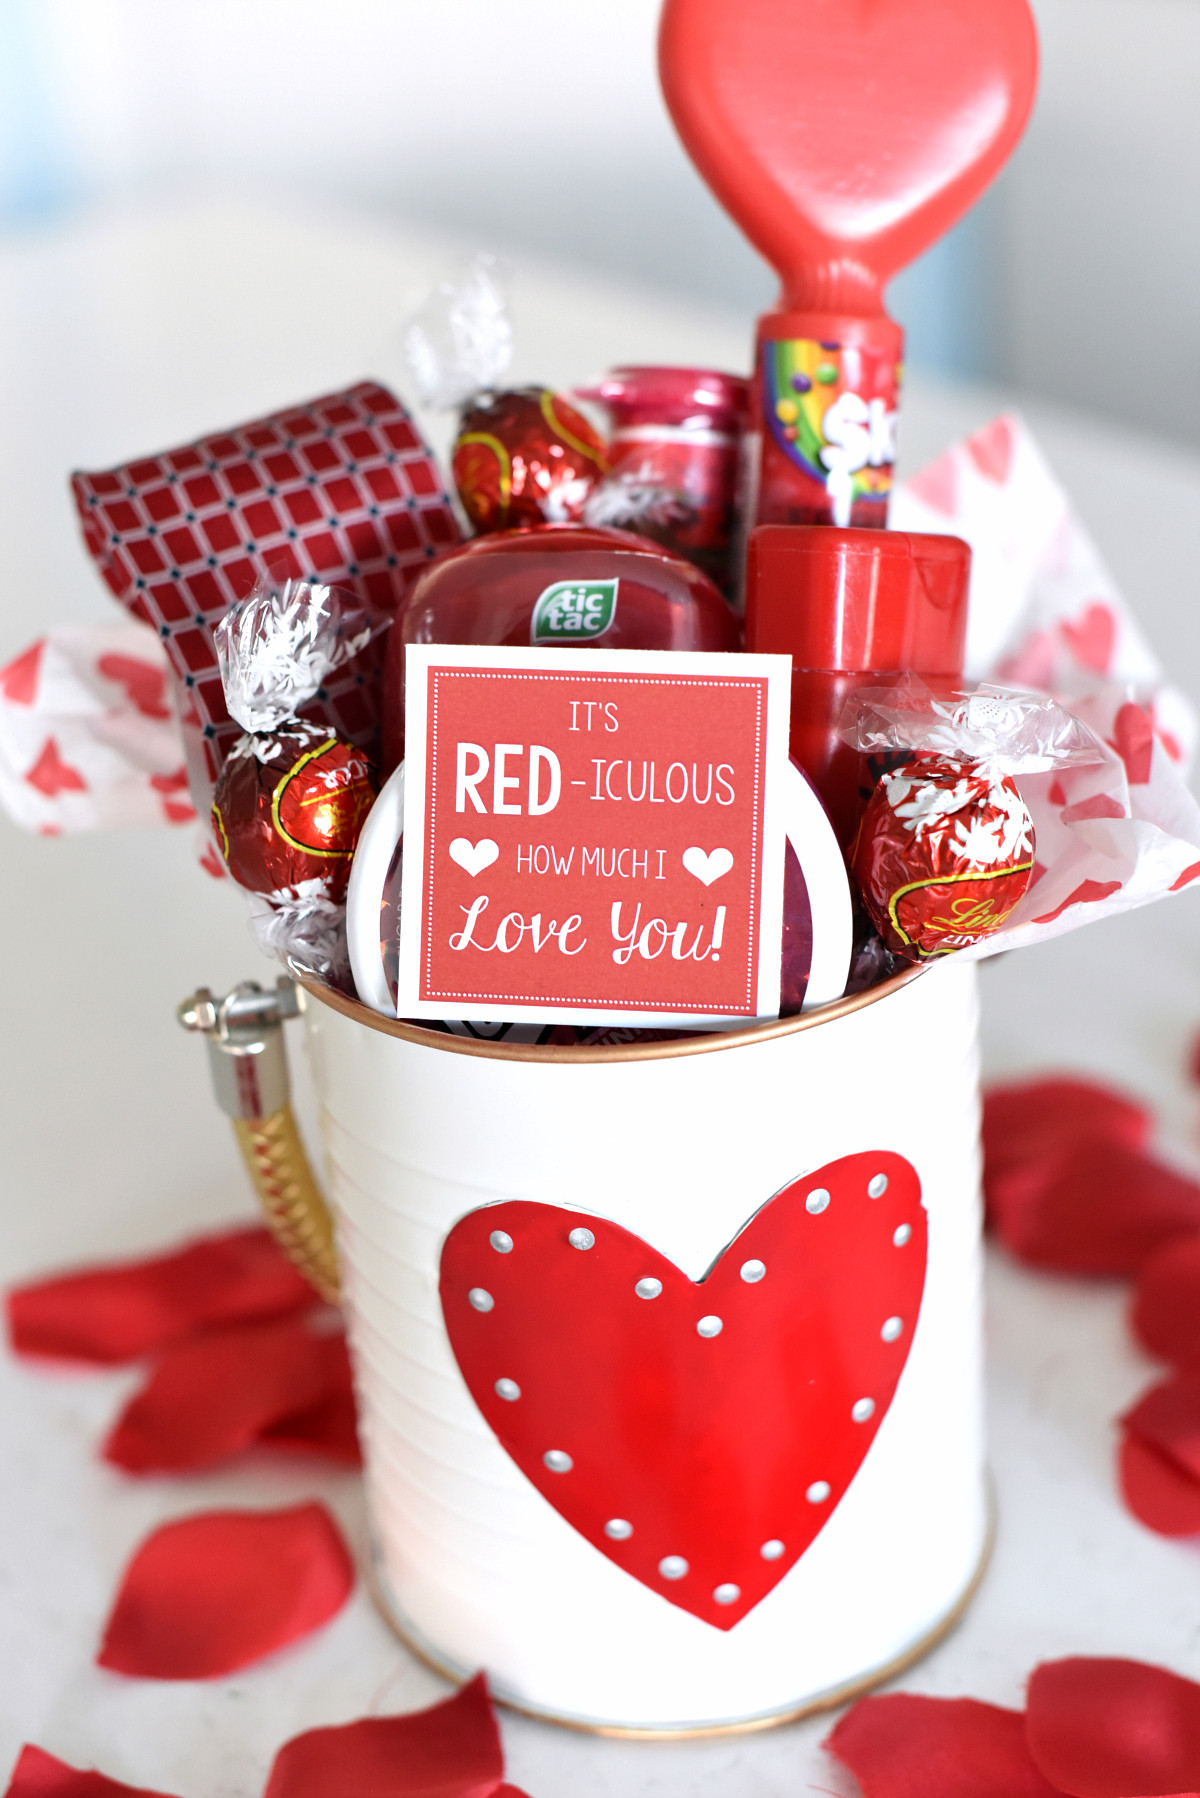 Best ideas about Cute Valentine Gift Ideas
. Save or Pin Cute Valentine s Day Gift Idea RED iculous Basket Now.